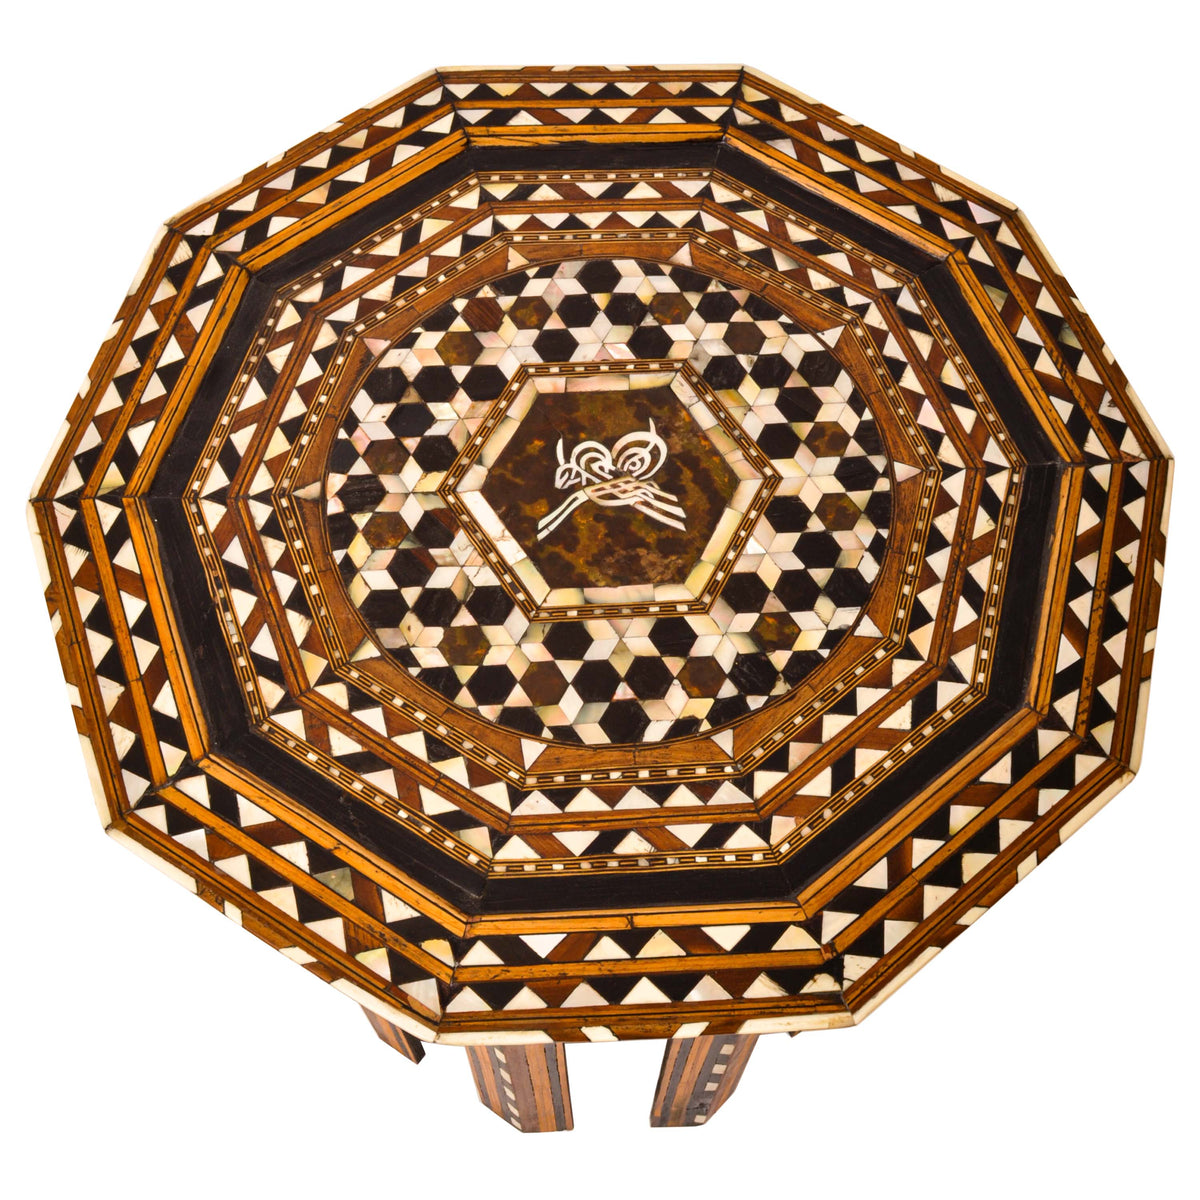 Fine Antique Moorish Ottoman Inlaid Syrian Levantine Table Tabouret Islamic 1880